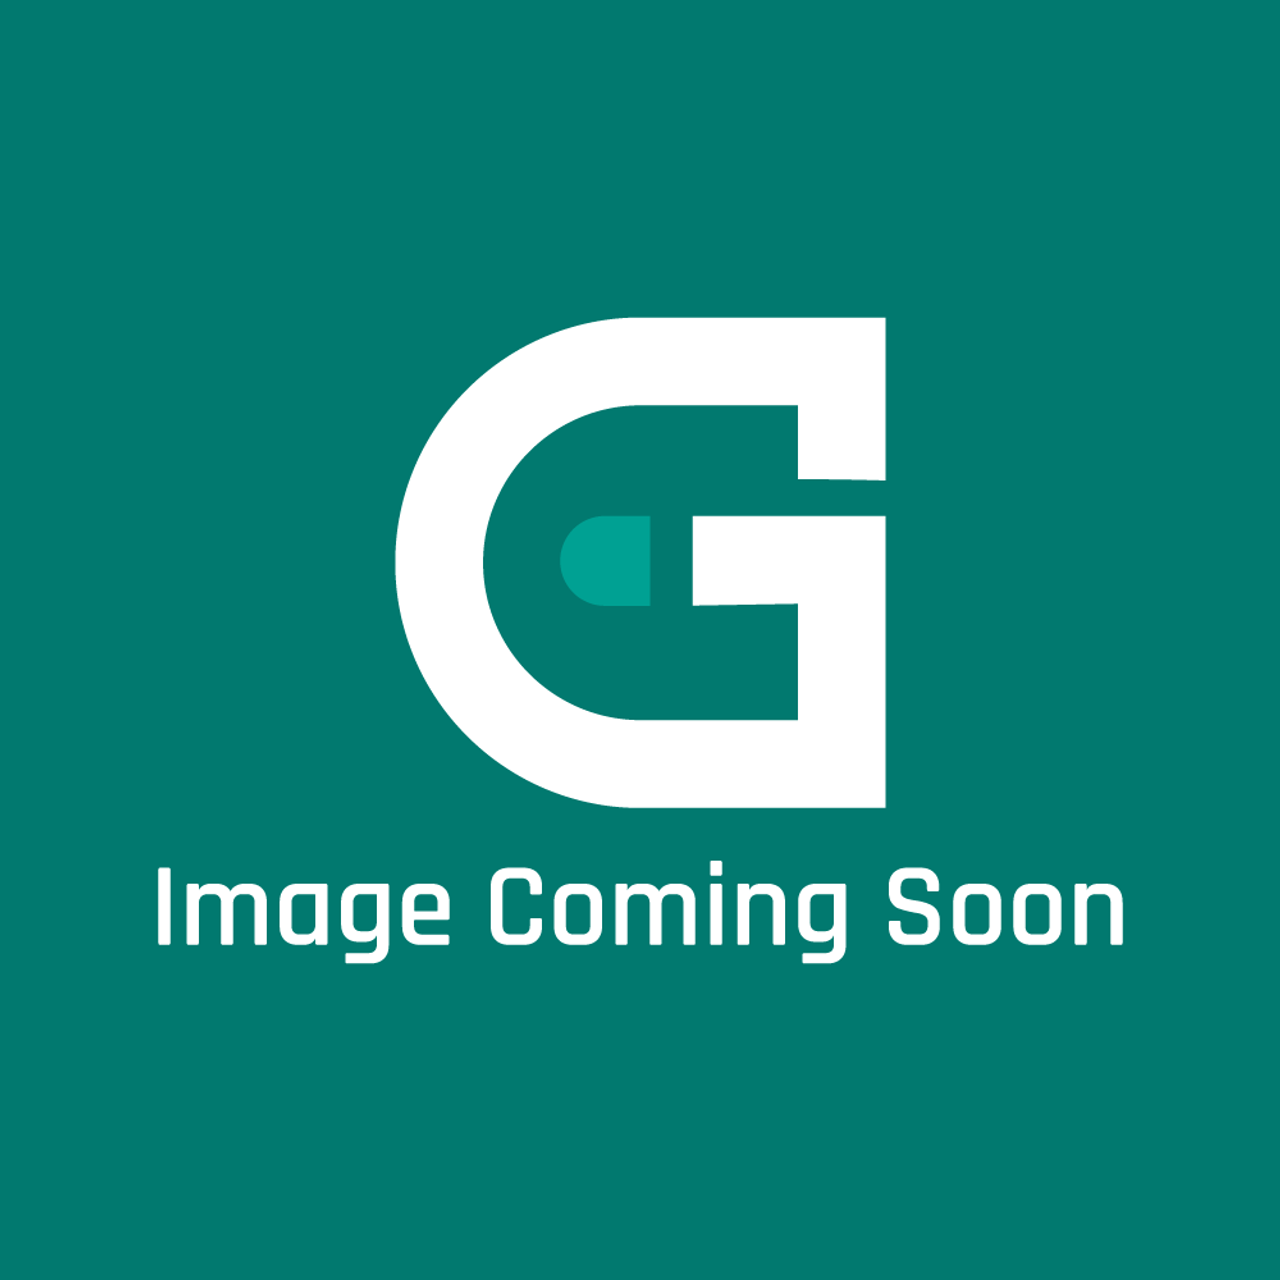 GE Appliances WR72X10190 - Fz Slide Asm Lh - Image Coming Soon!